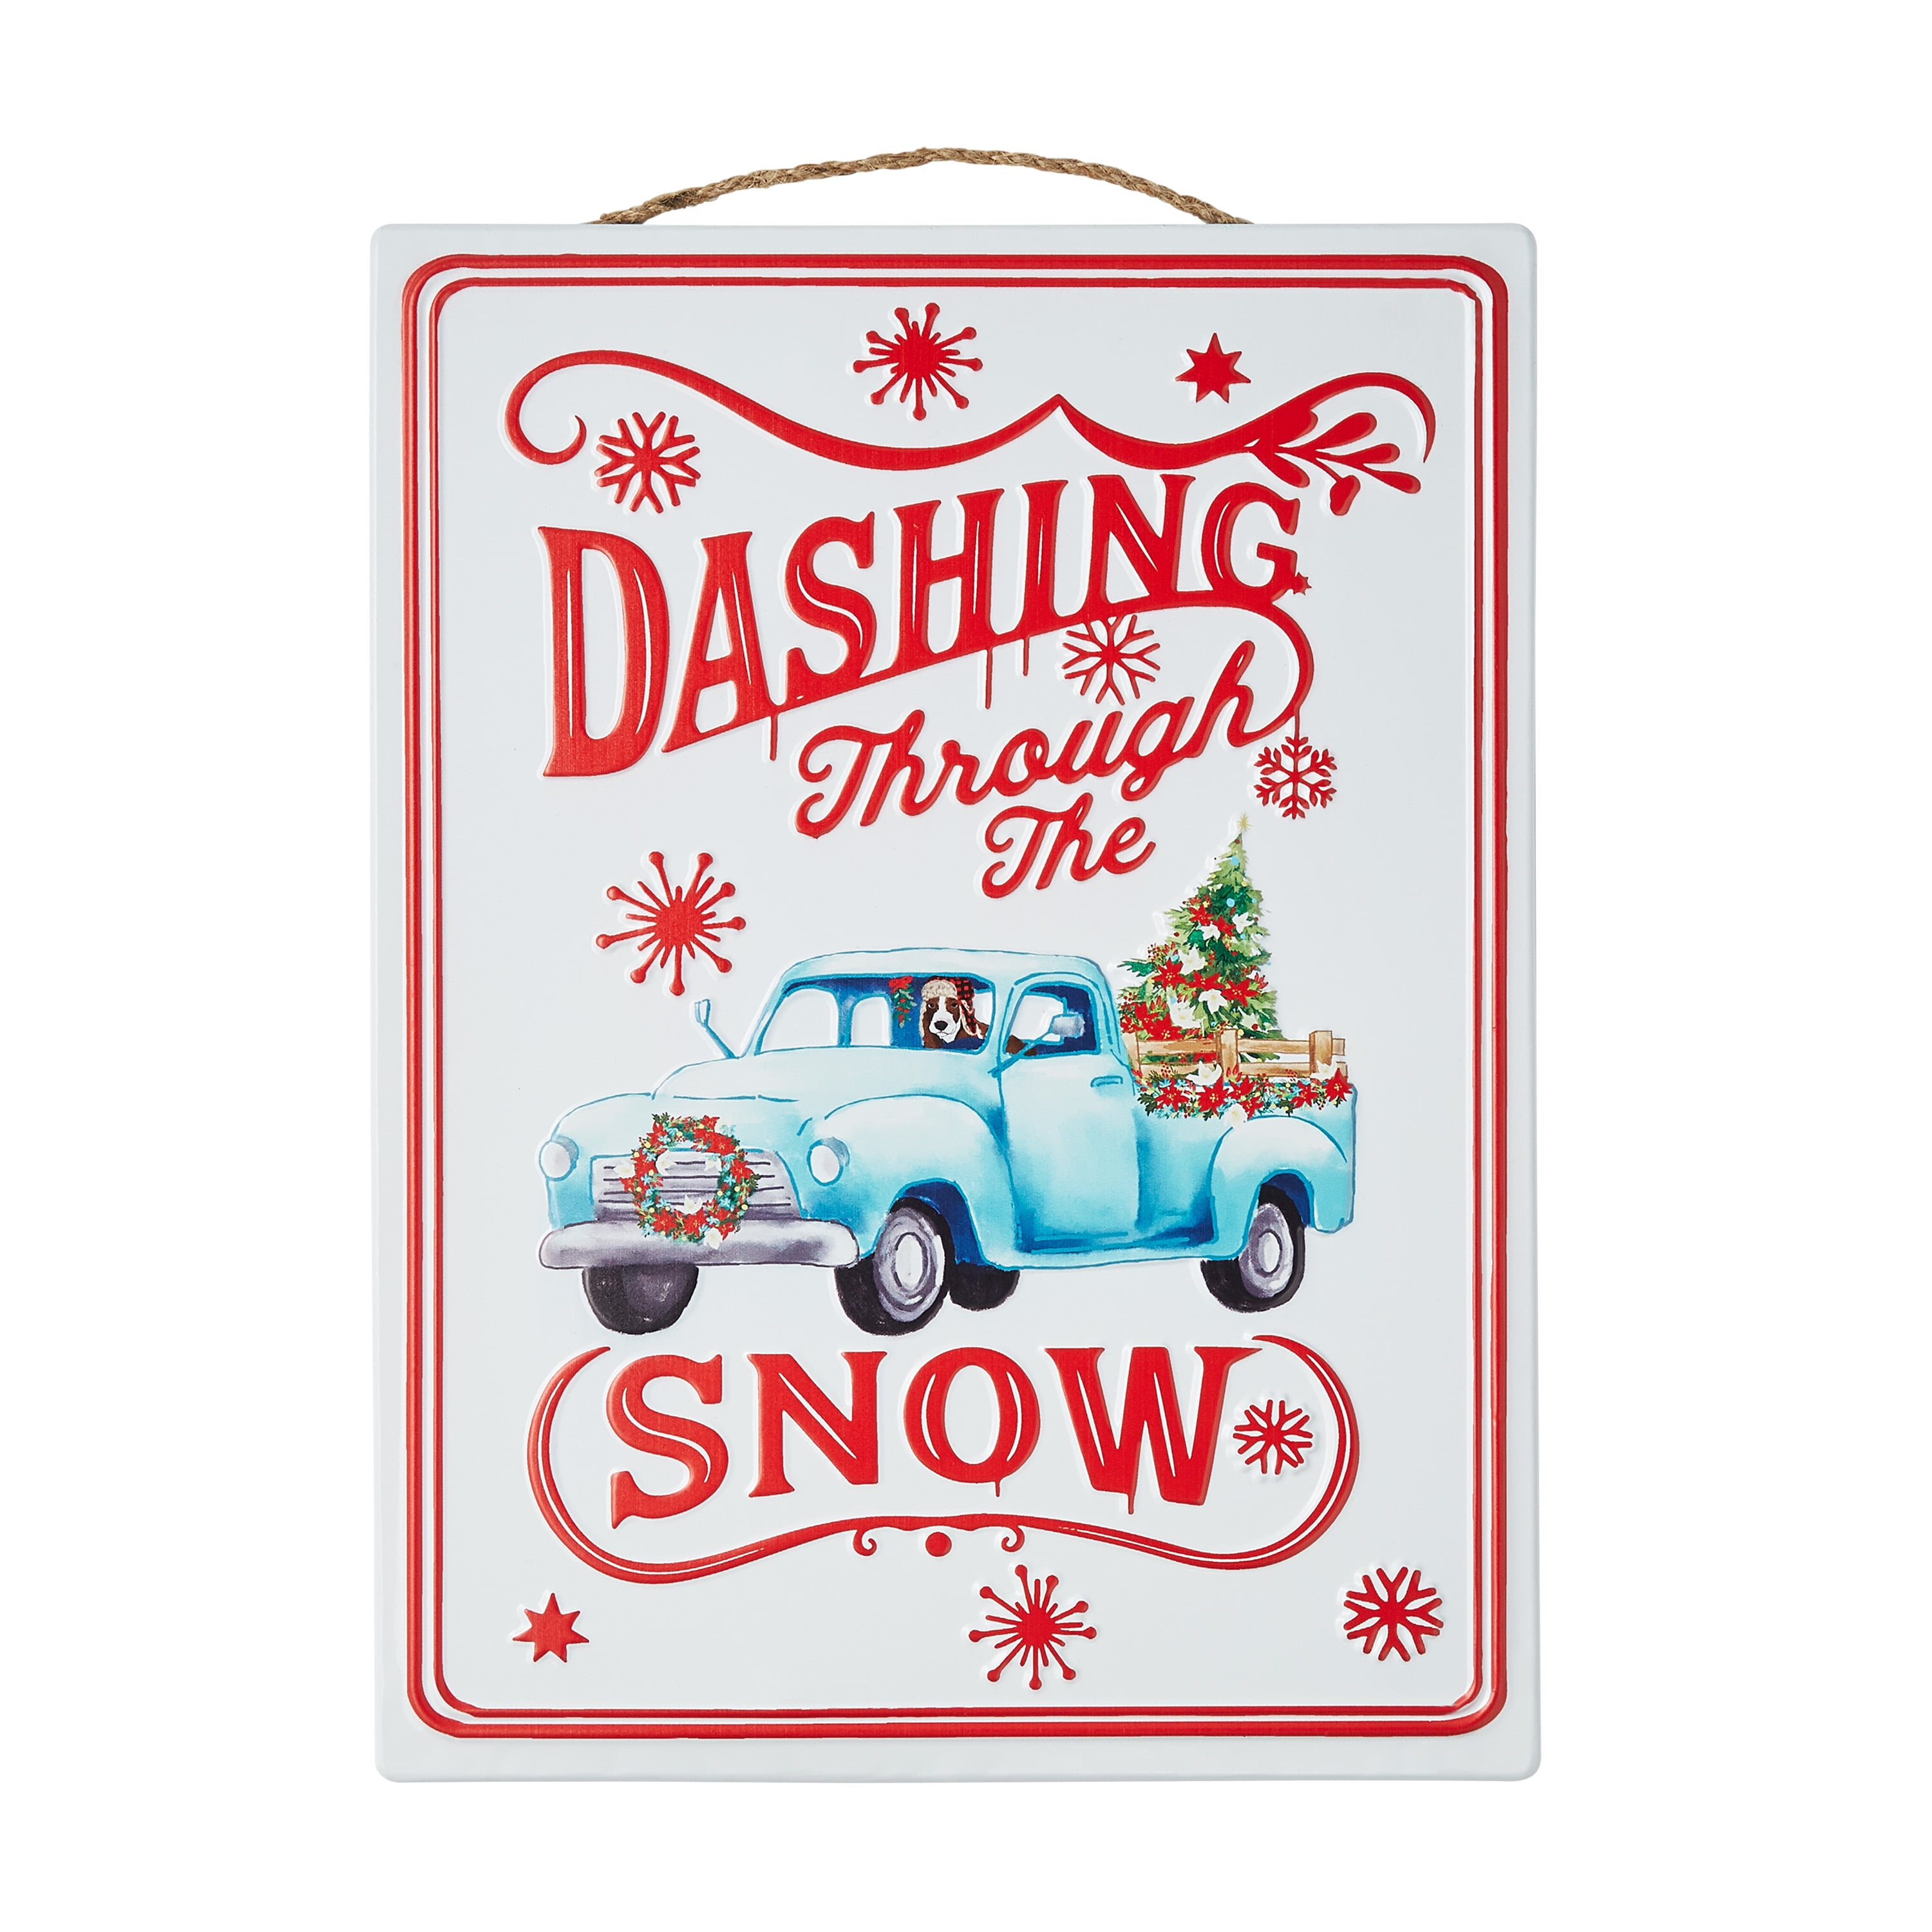 Star Bottle LED Light Up Dashing through the Snow Festive Christmas Gift/decal 